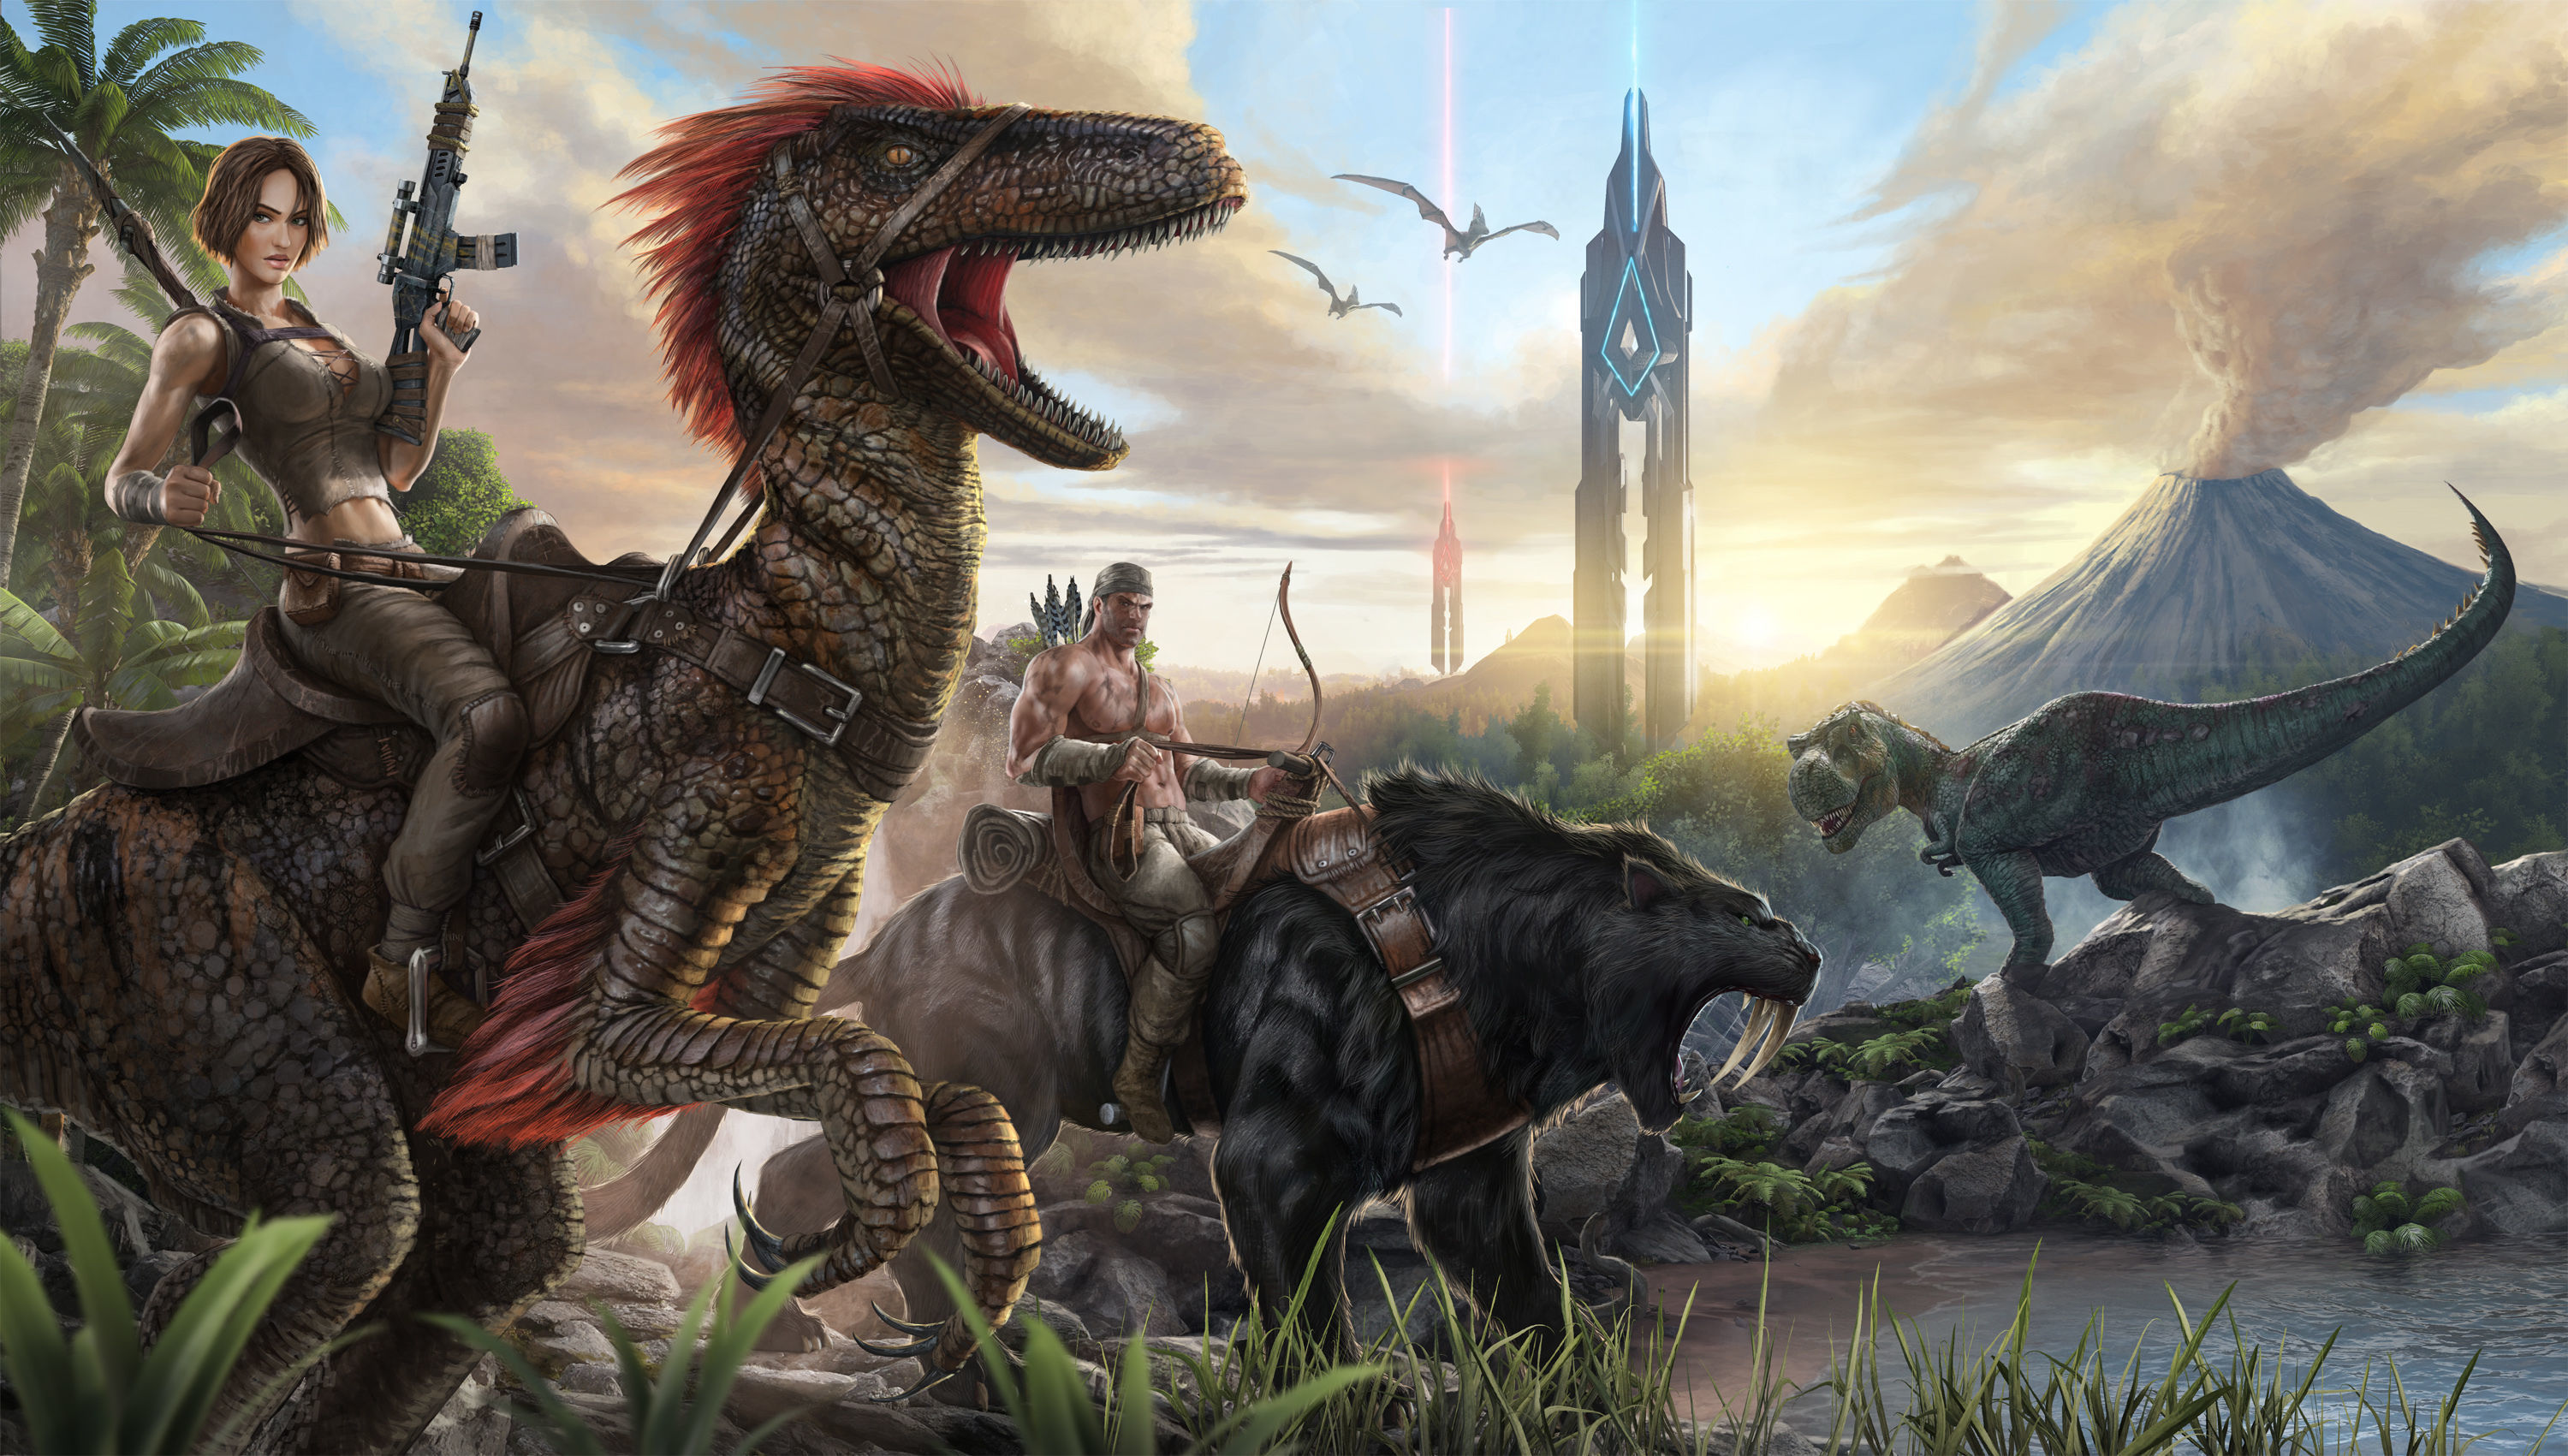 dinosaur, ark: survival evolved, video game, warrior, woman warrior